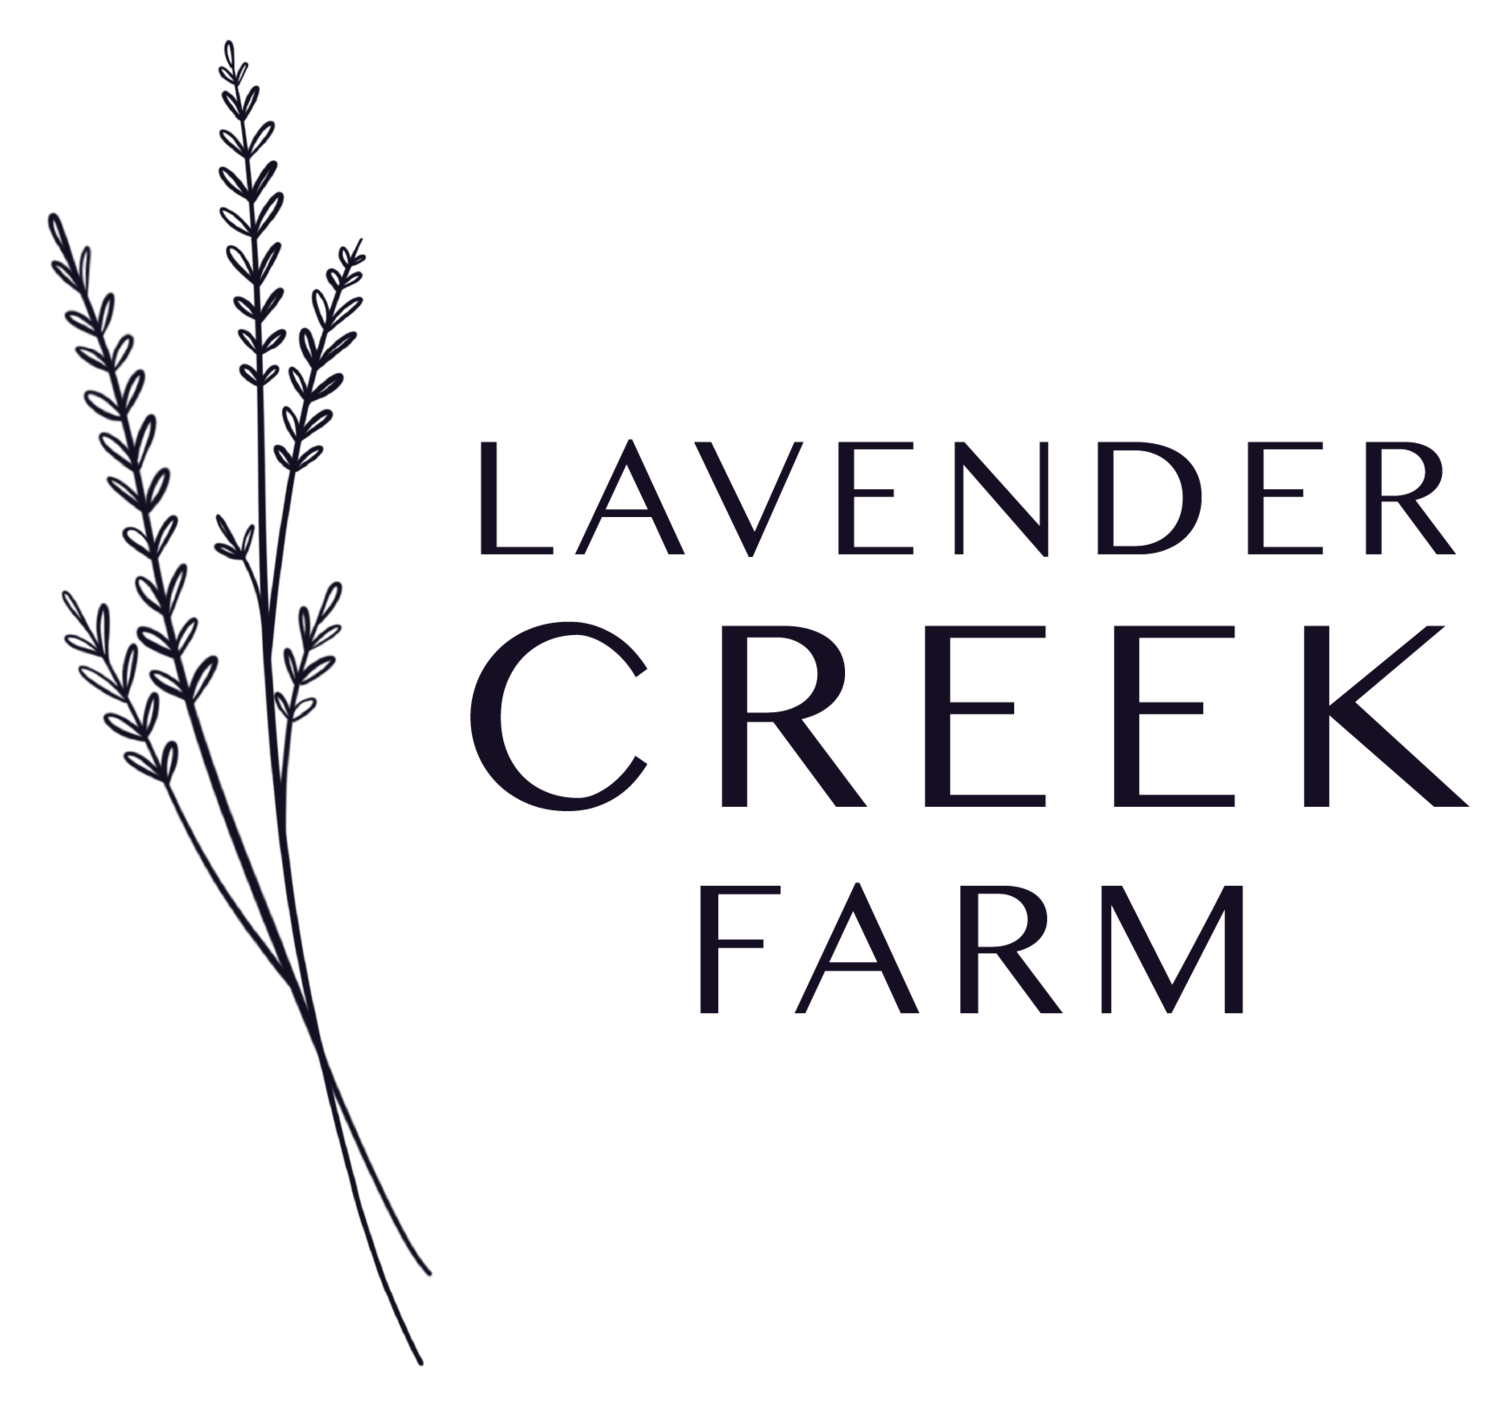 Lavender Creek Farm